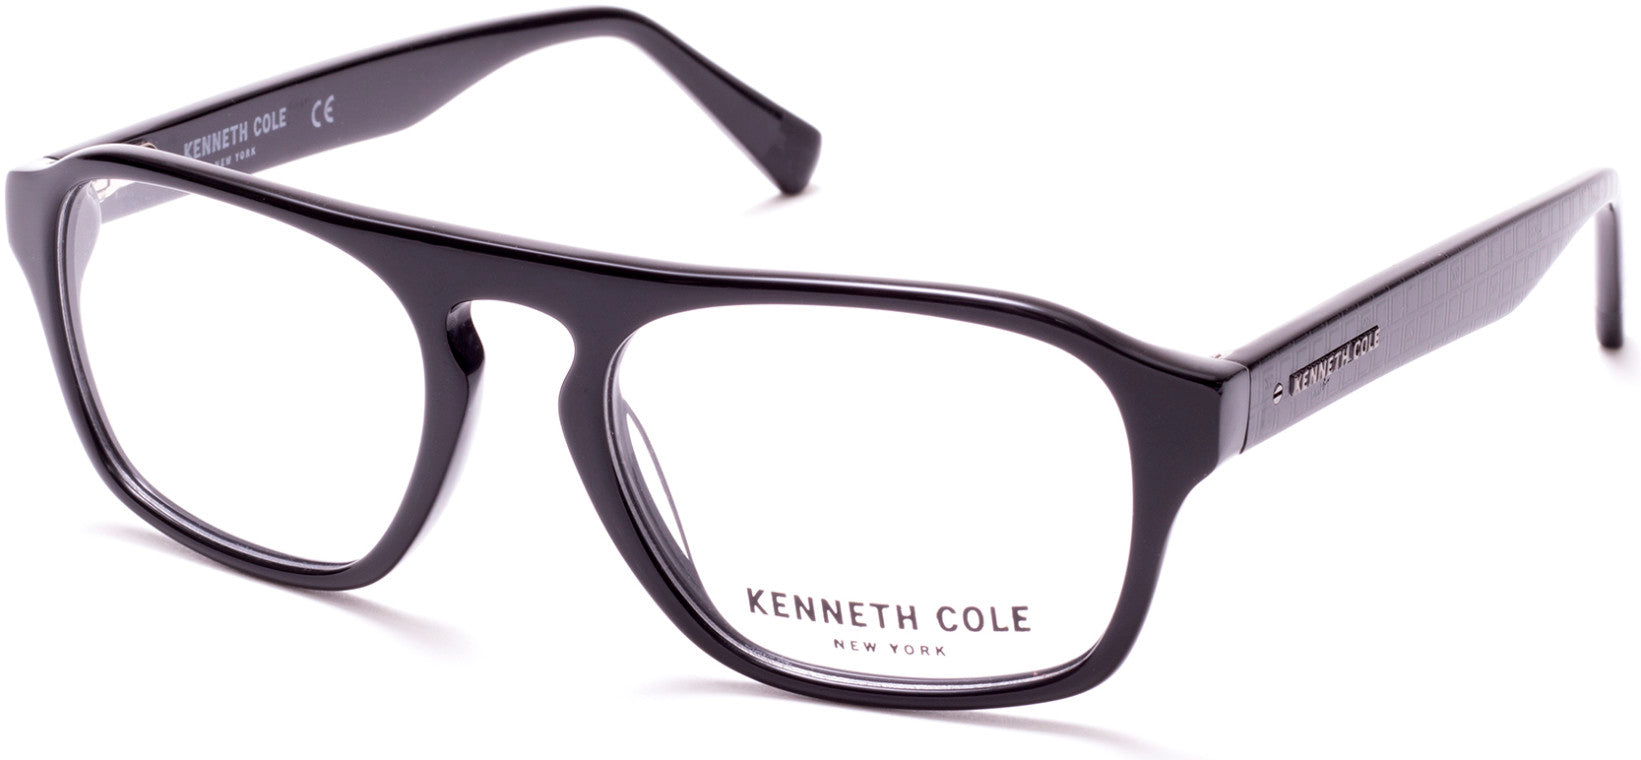 Kenneth Cole New York,Kenneth Cole Reaction KC0285 Oval Eyeglasses 001-001 - Shiny Black